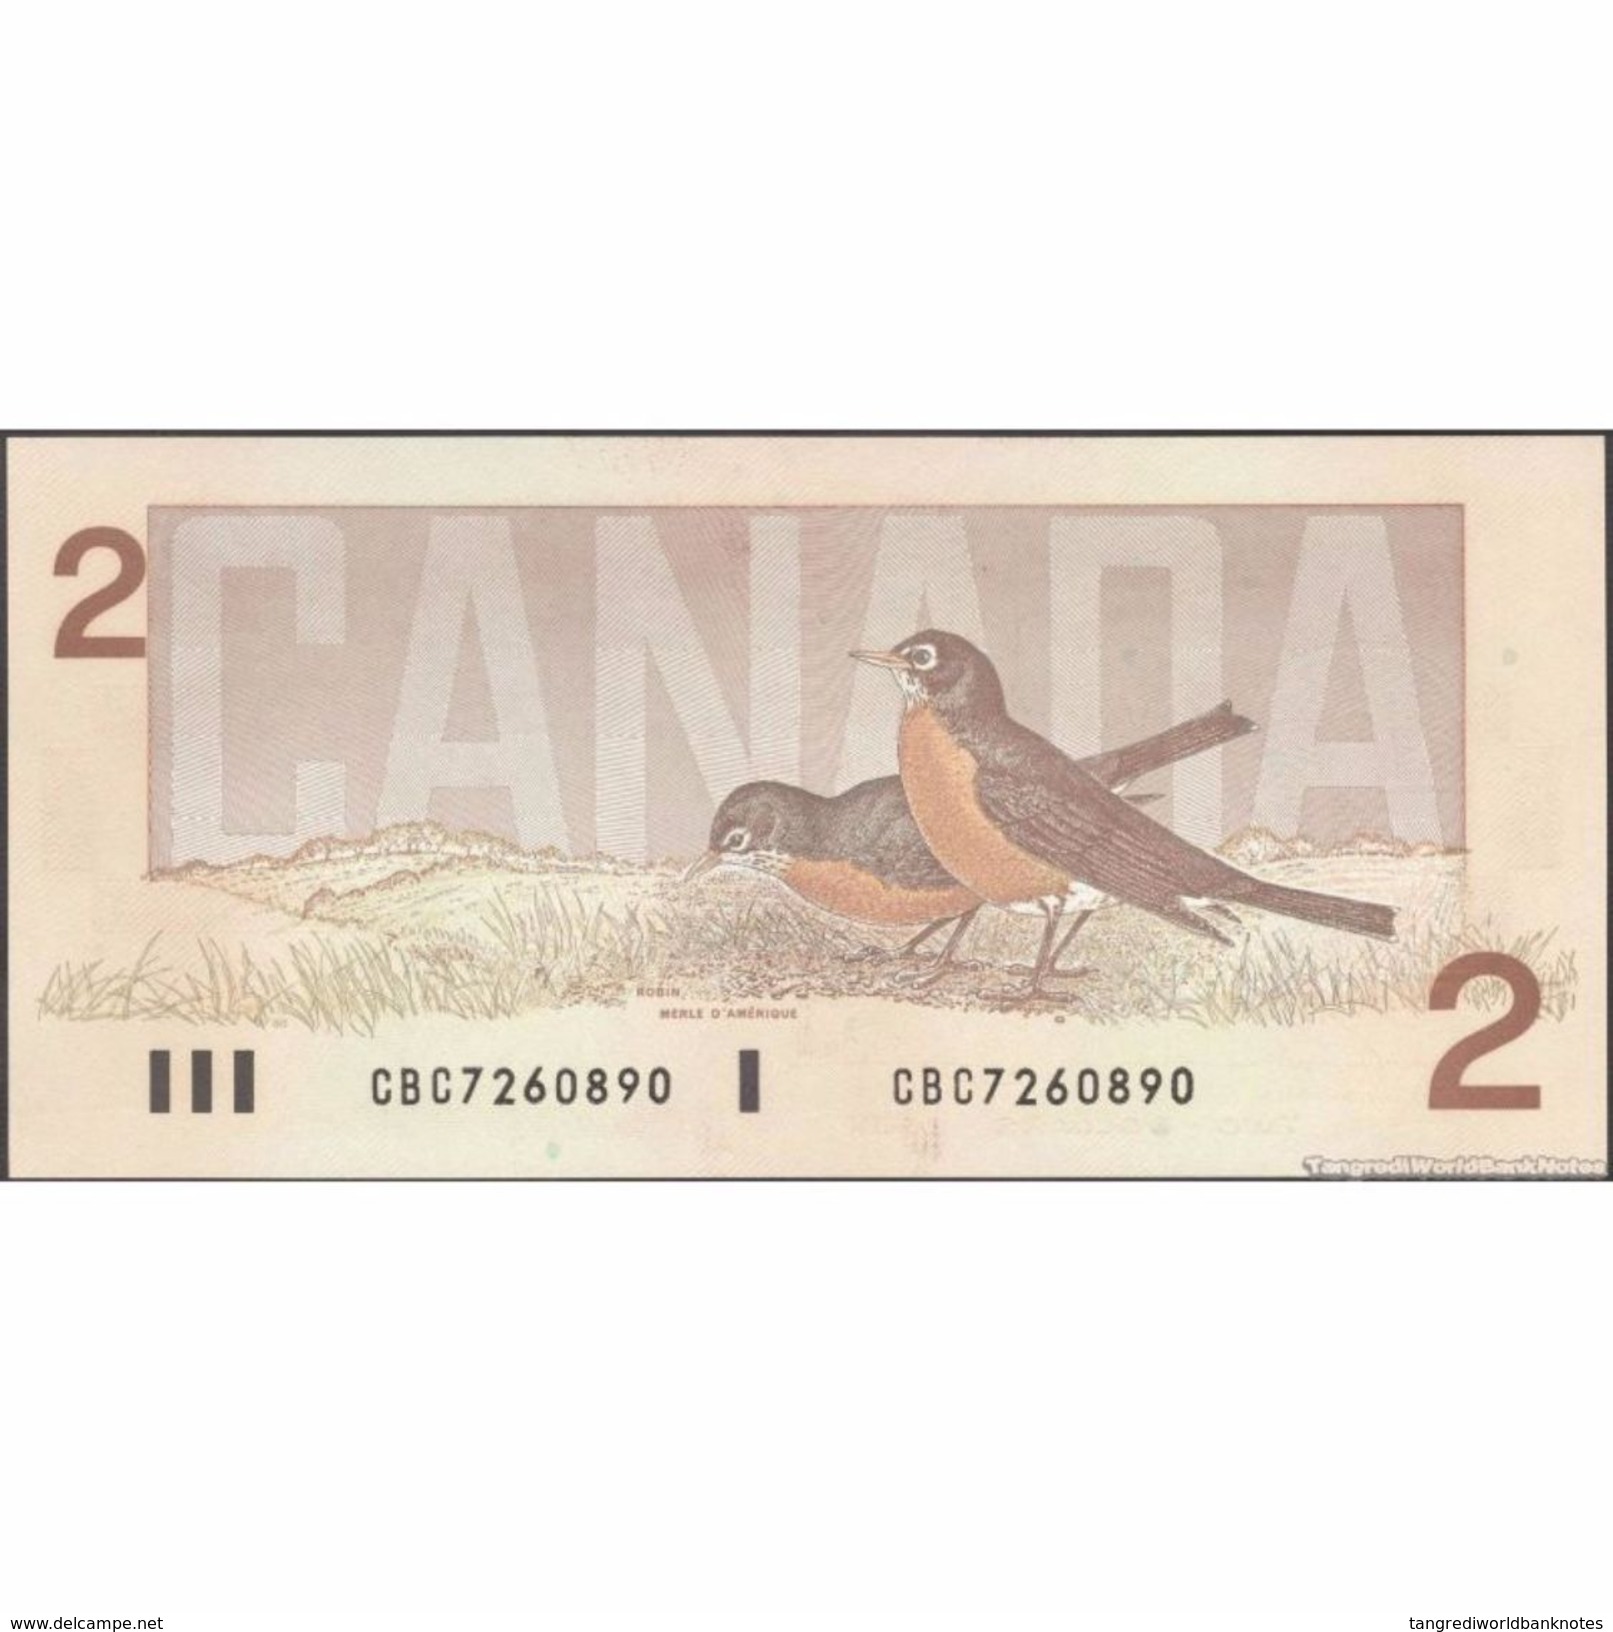 TWN - CANADA 94b - 2 Dollars 1979 Prefix GBG - Signatures: Thiessen & Crow UNC - Canada